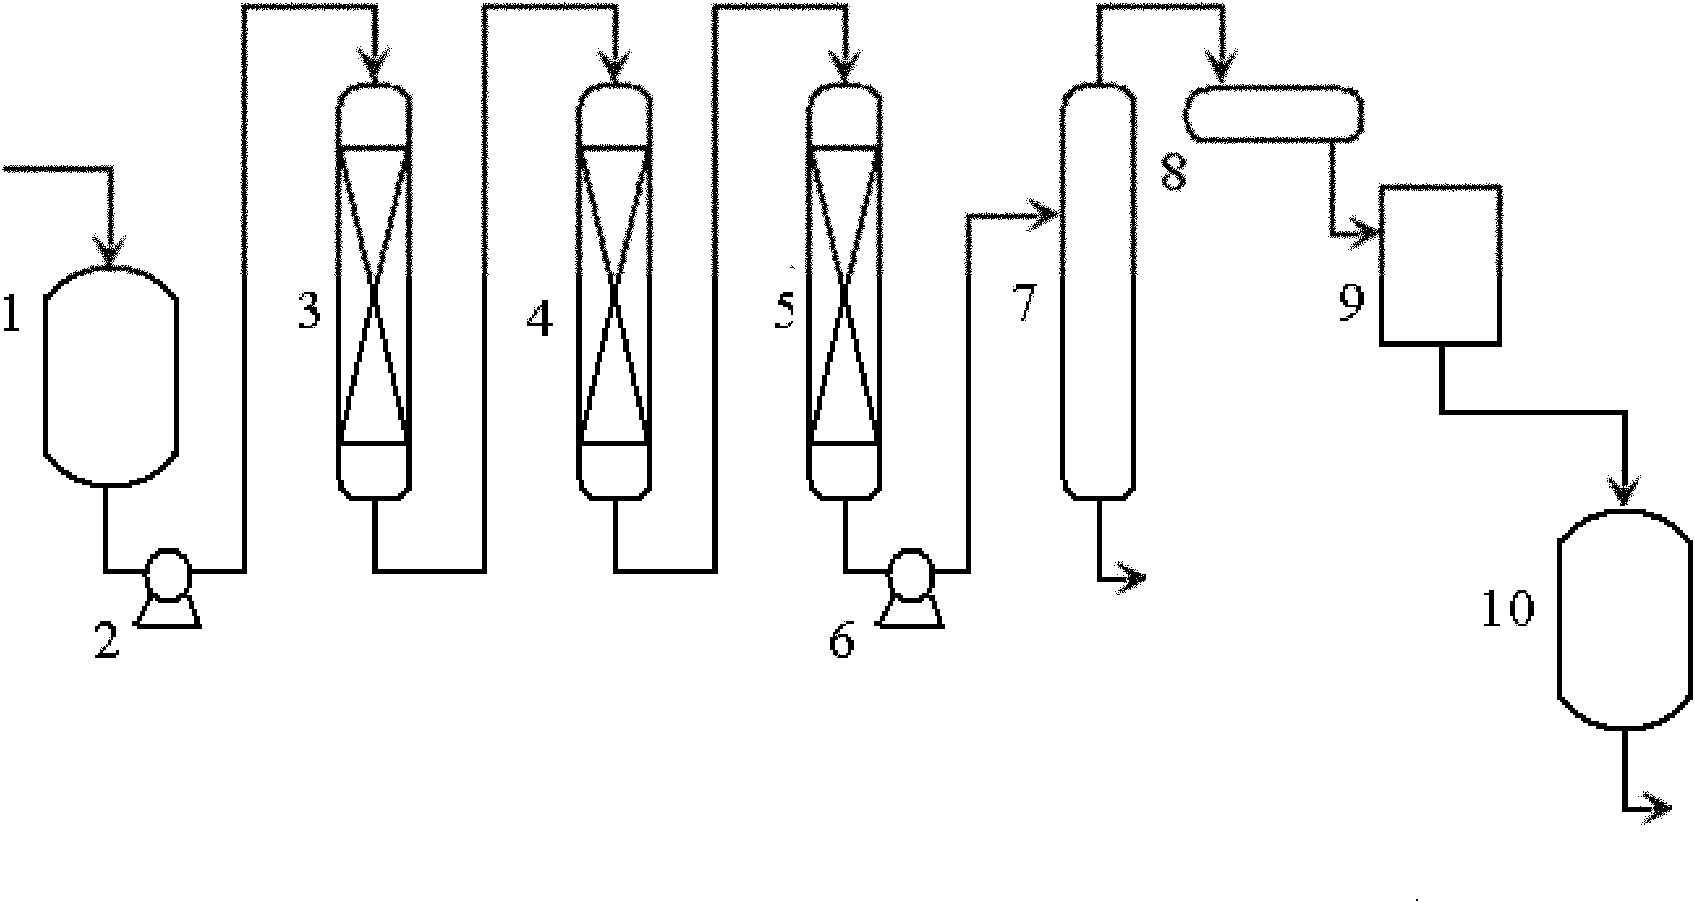 Method for improving quality of industrial N-methylpyrrolidone